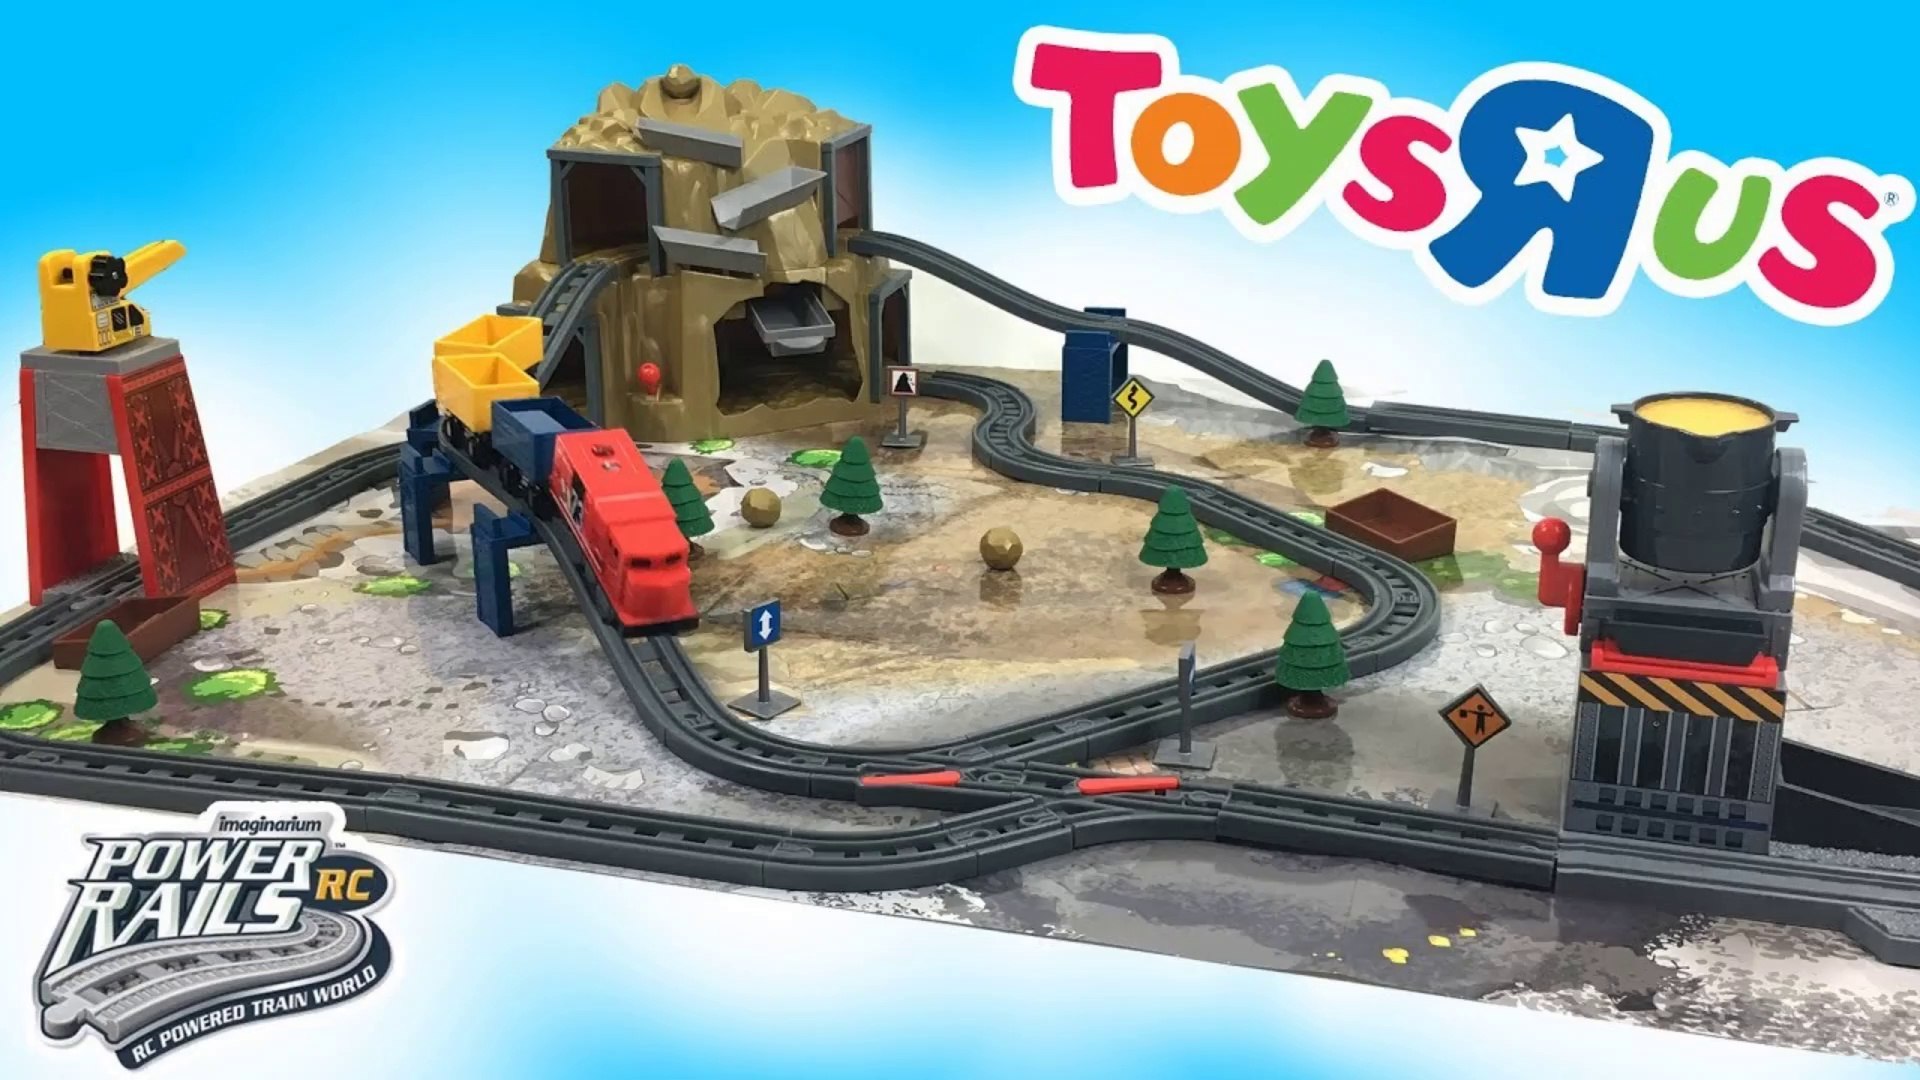 Toys R Us Imaginarium Power Rails Rc Golden Mountain Train World Wooden  Railway || Keith'S Toy Box - Video Dailymotion